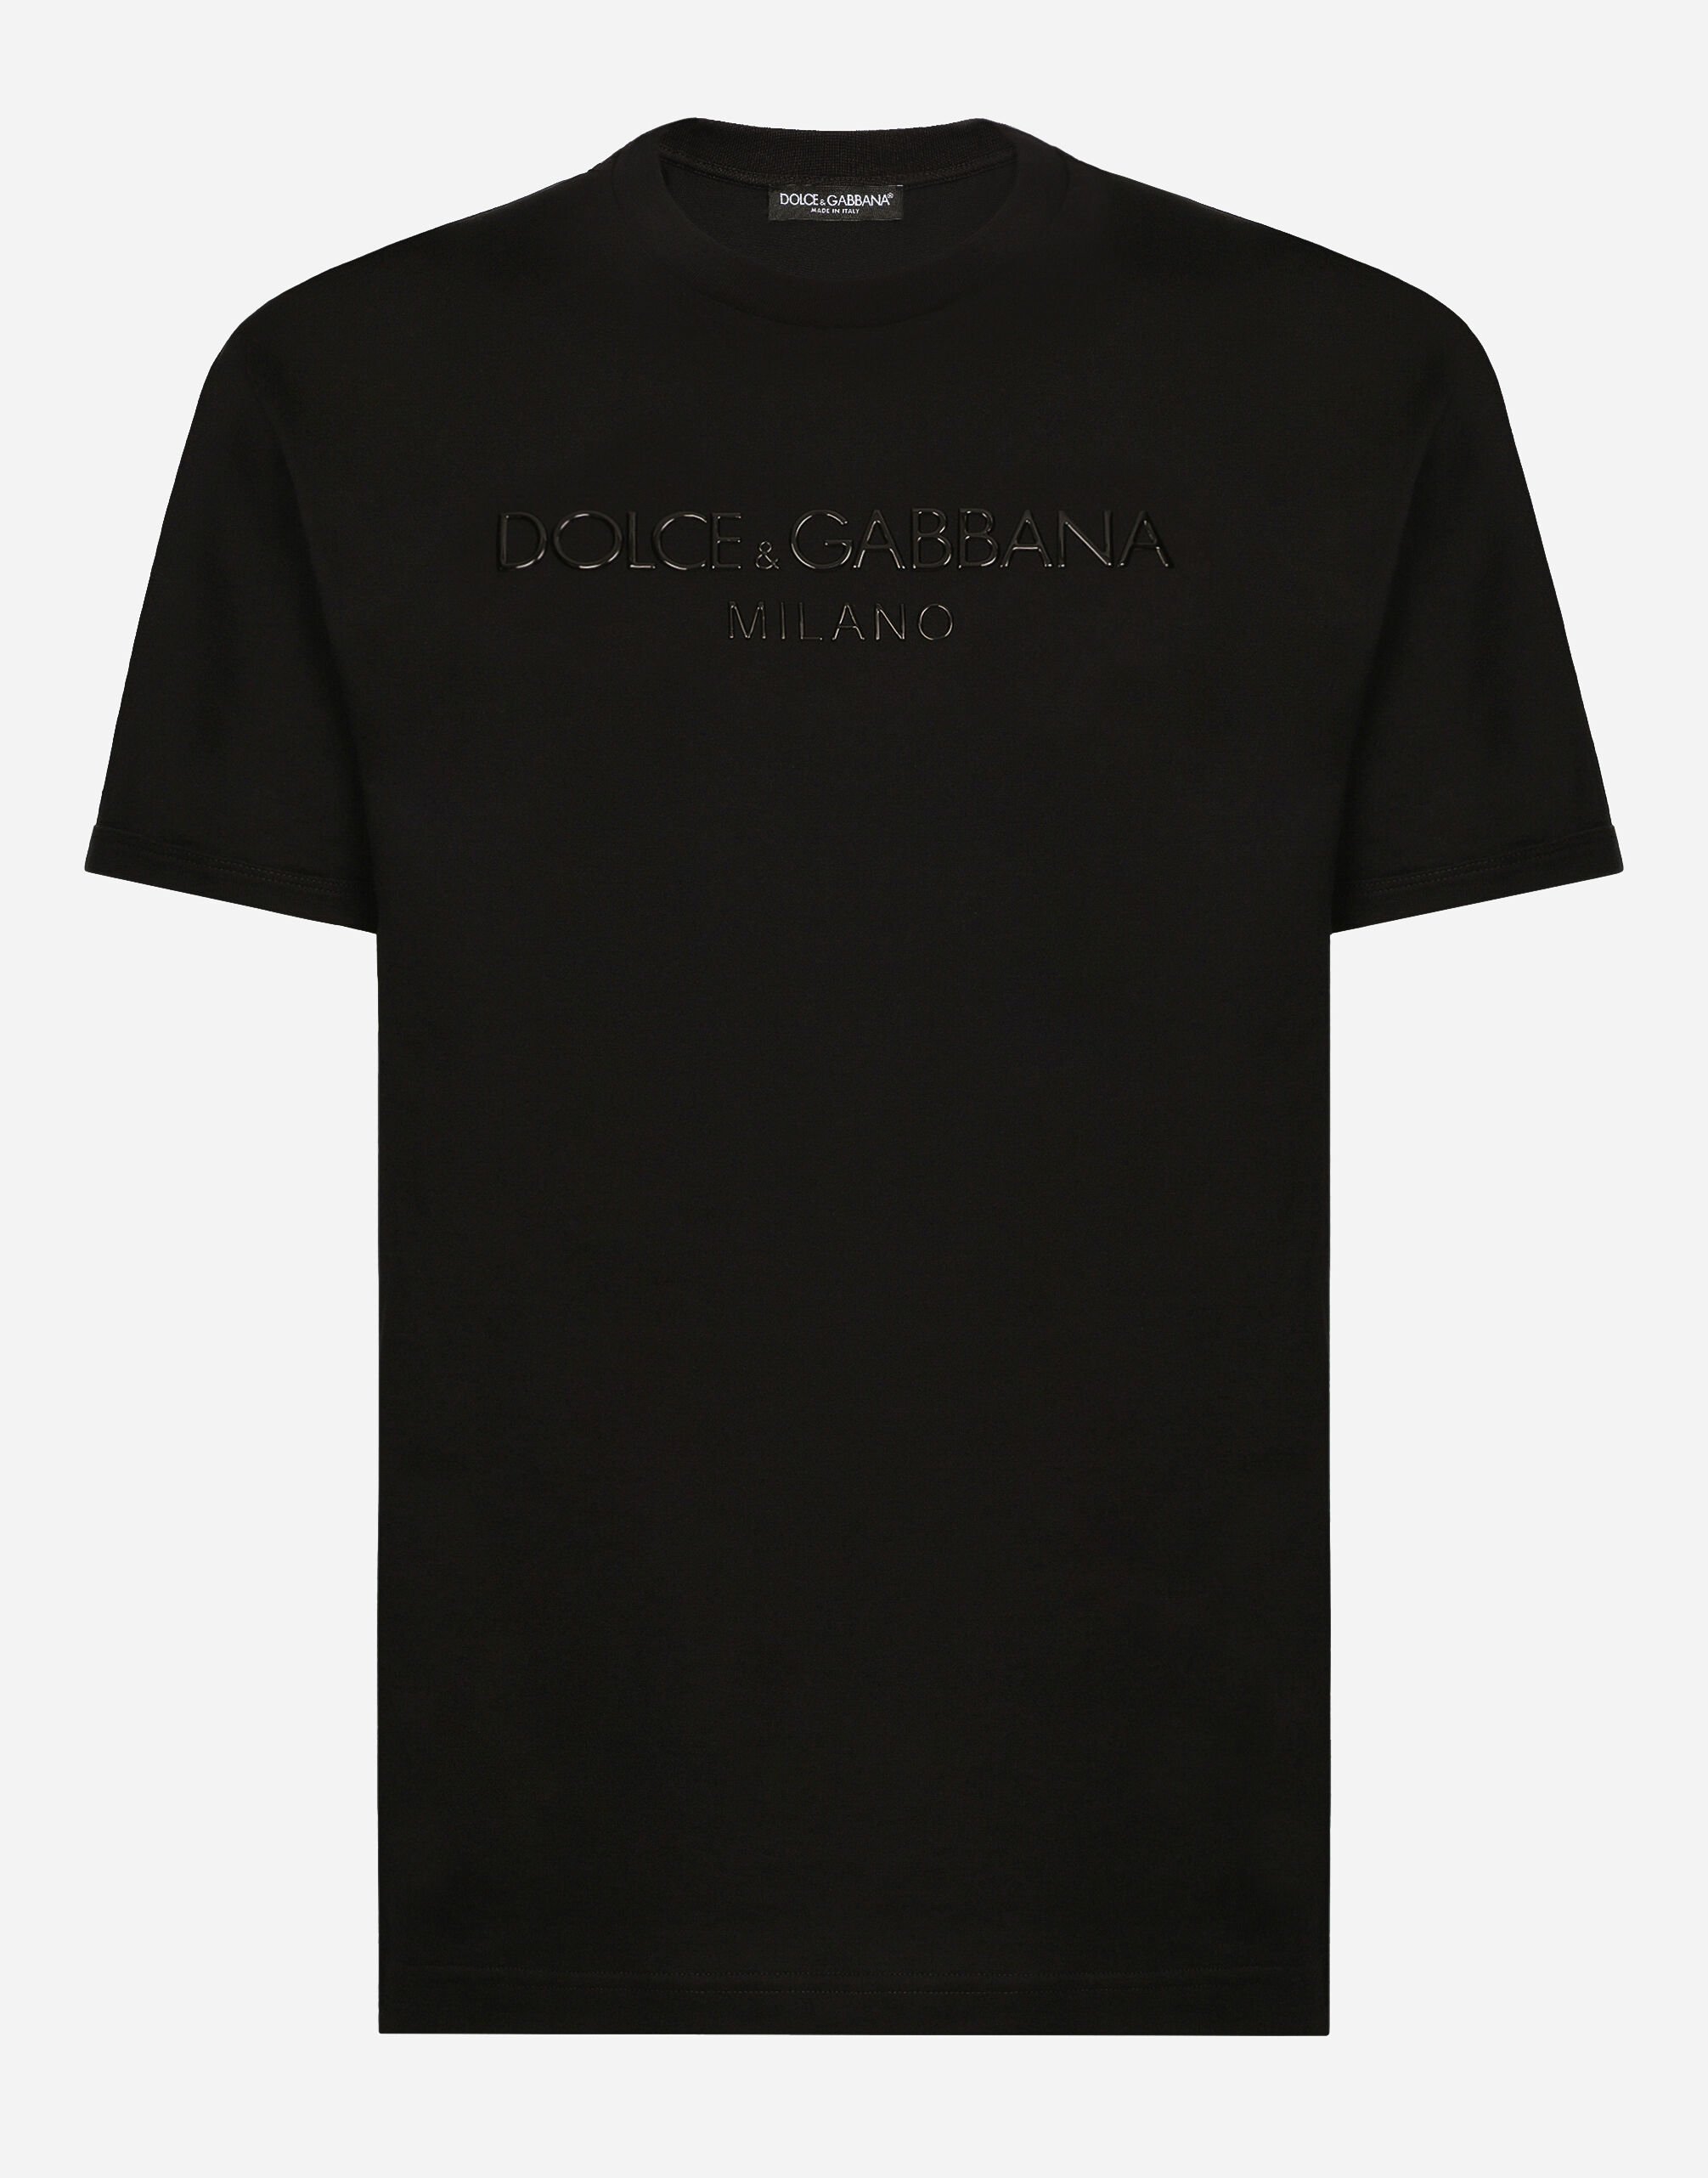 Dolce&Gabbana T-shirt girocollo con stampa Dolce&Gabbana Multicolore G2QU4TFRMD4